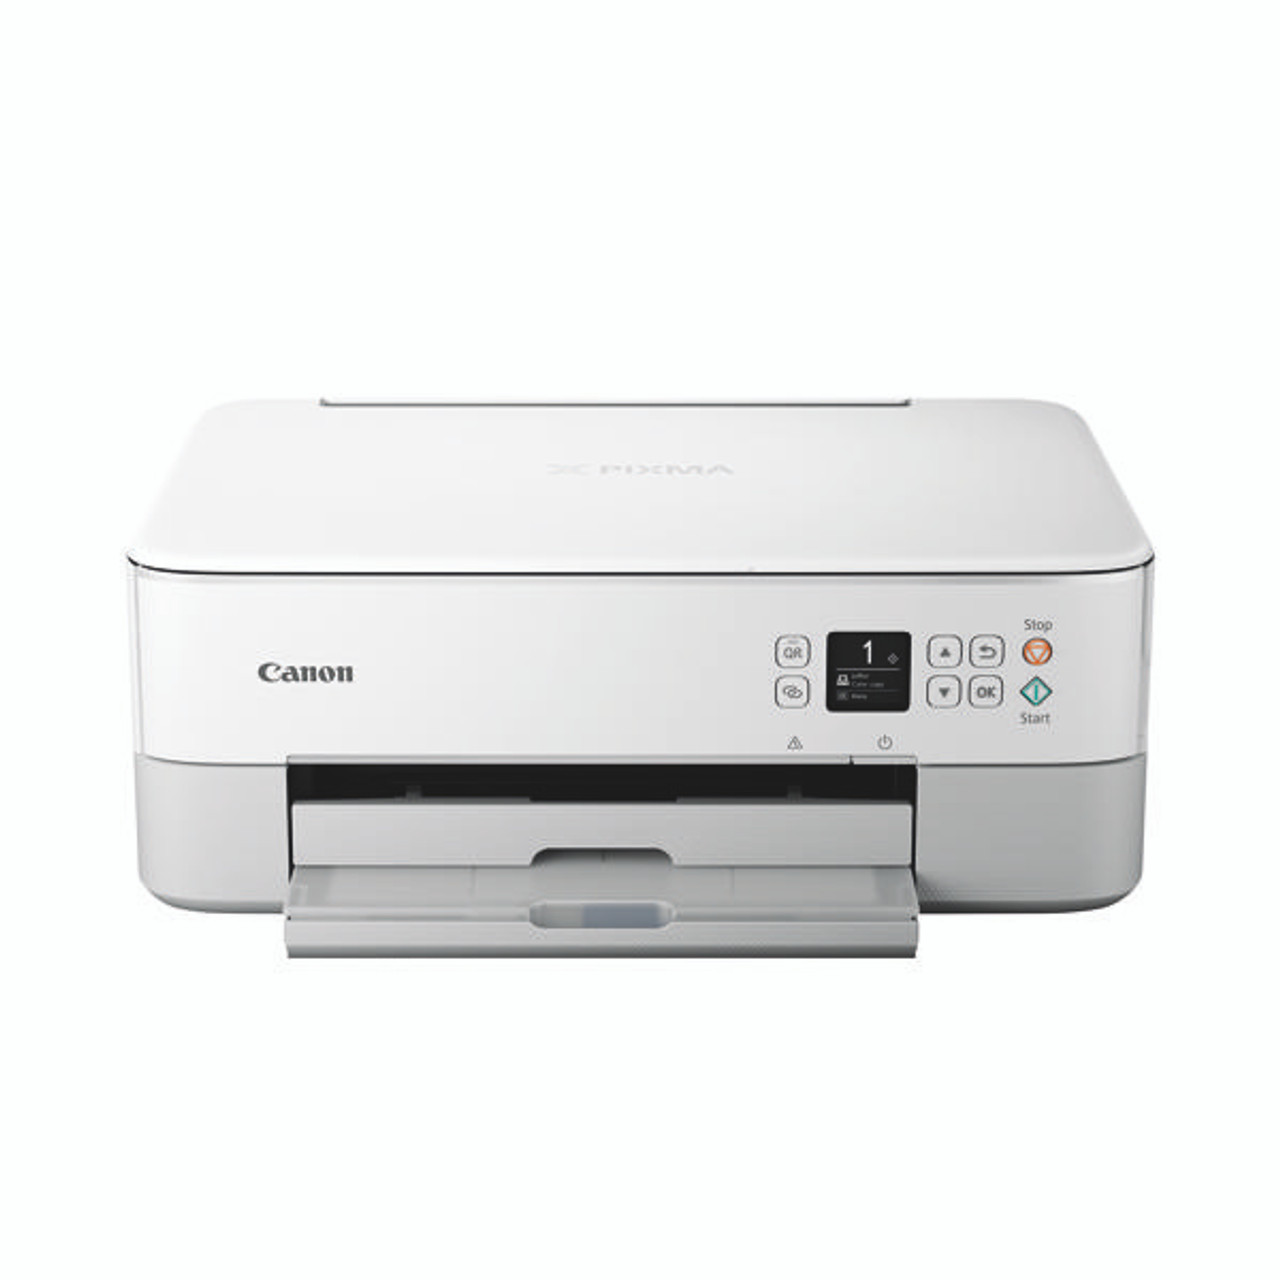 Canon PIXMA TS5150 All-in-one Wireless Multifunction Inkjet Printer - Black